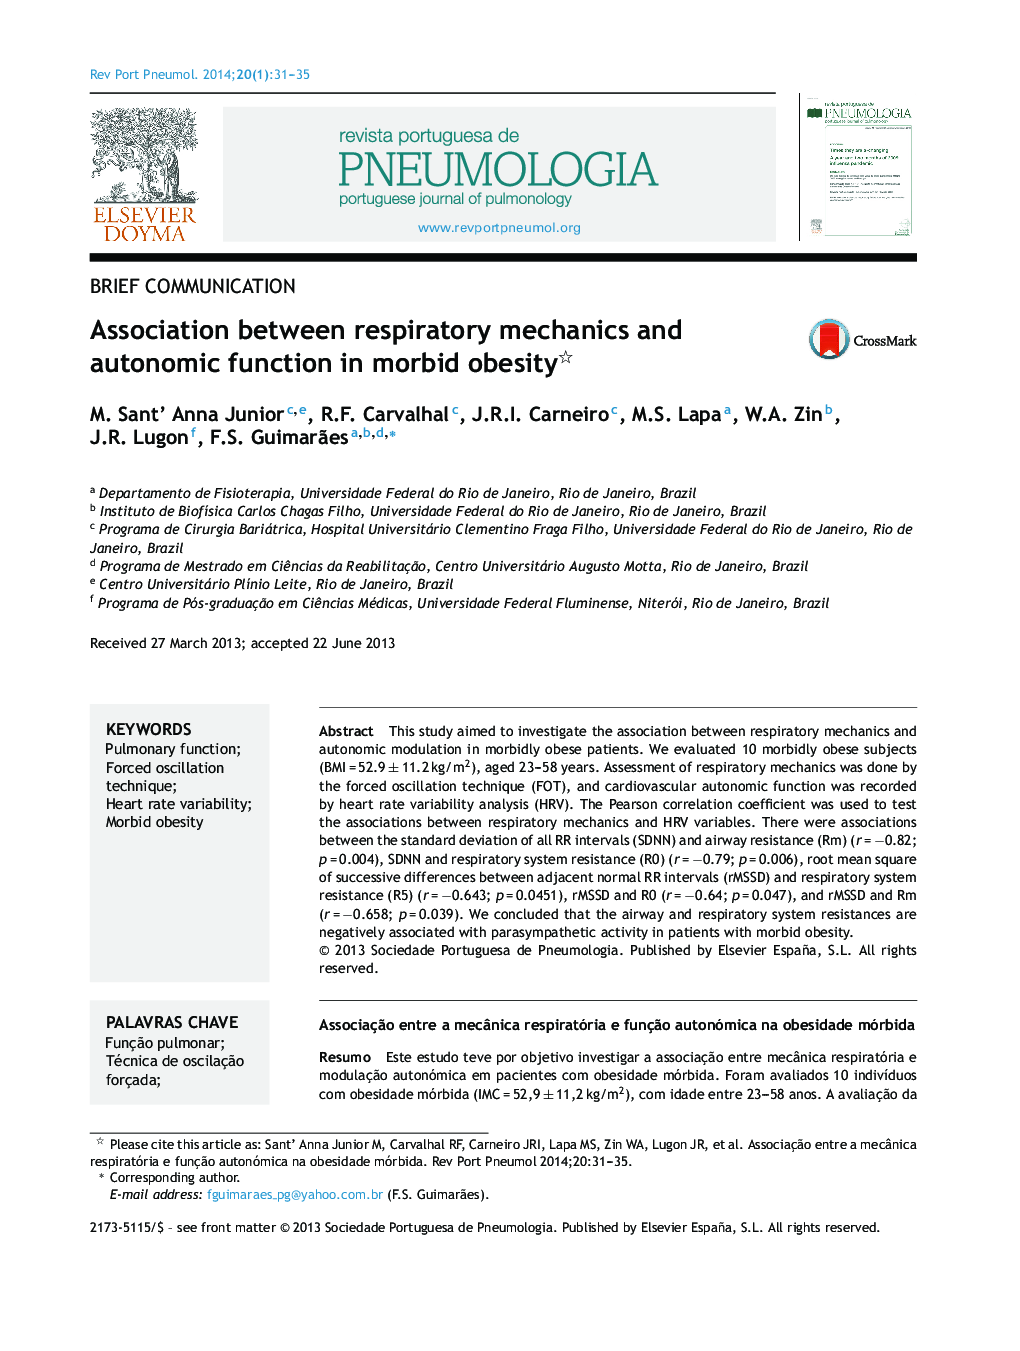 Association between respiratory mechanics and autonomic function in morbid obesity